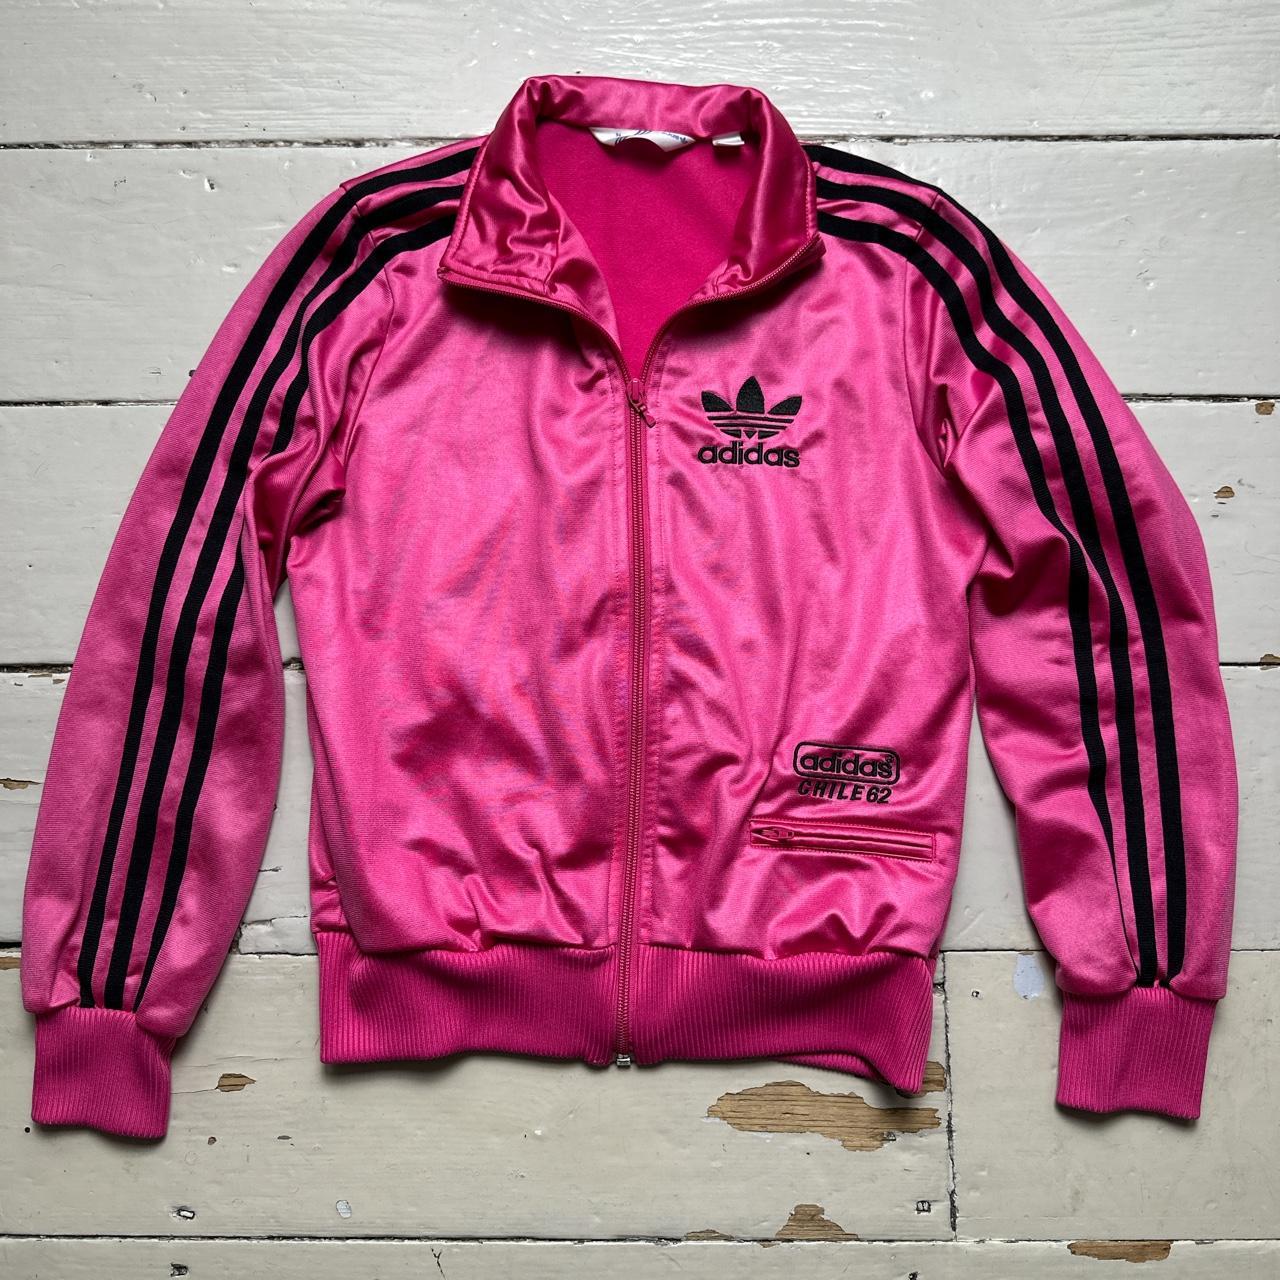 Adidas Originals Vintage Chile 62 Tracksuit Jacket Pink and Black